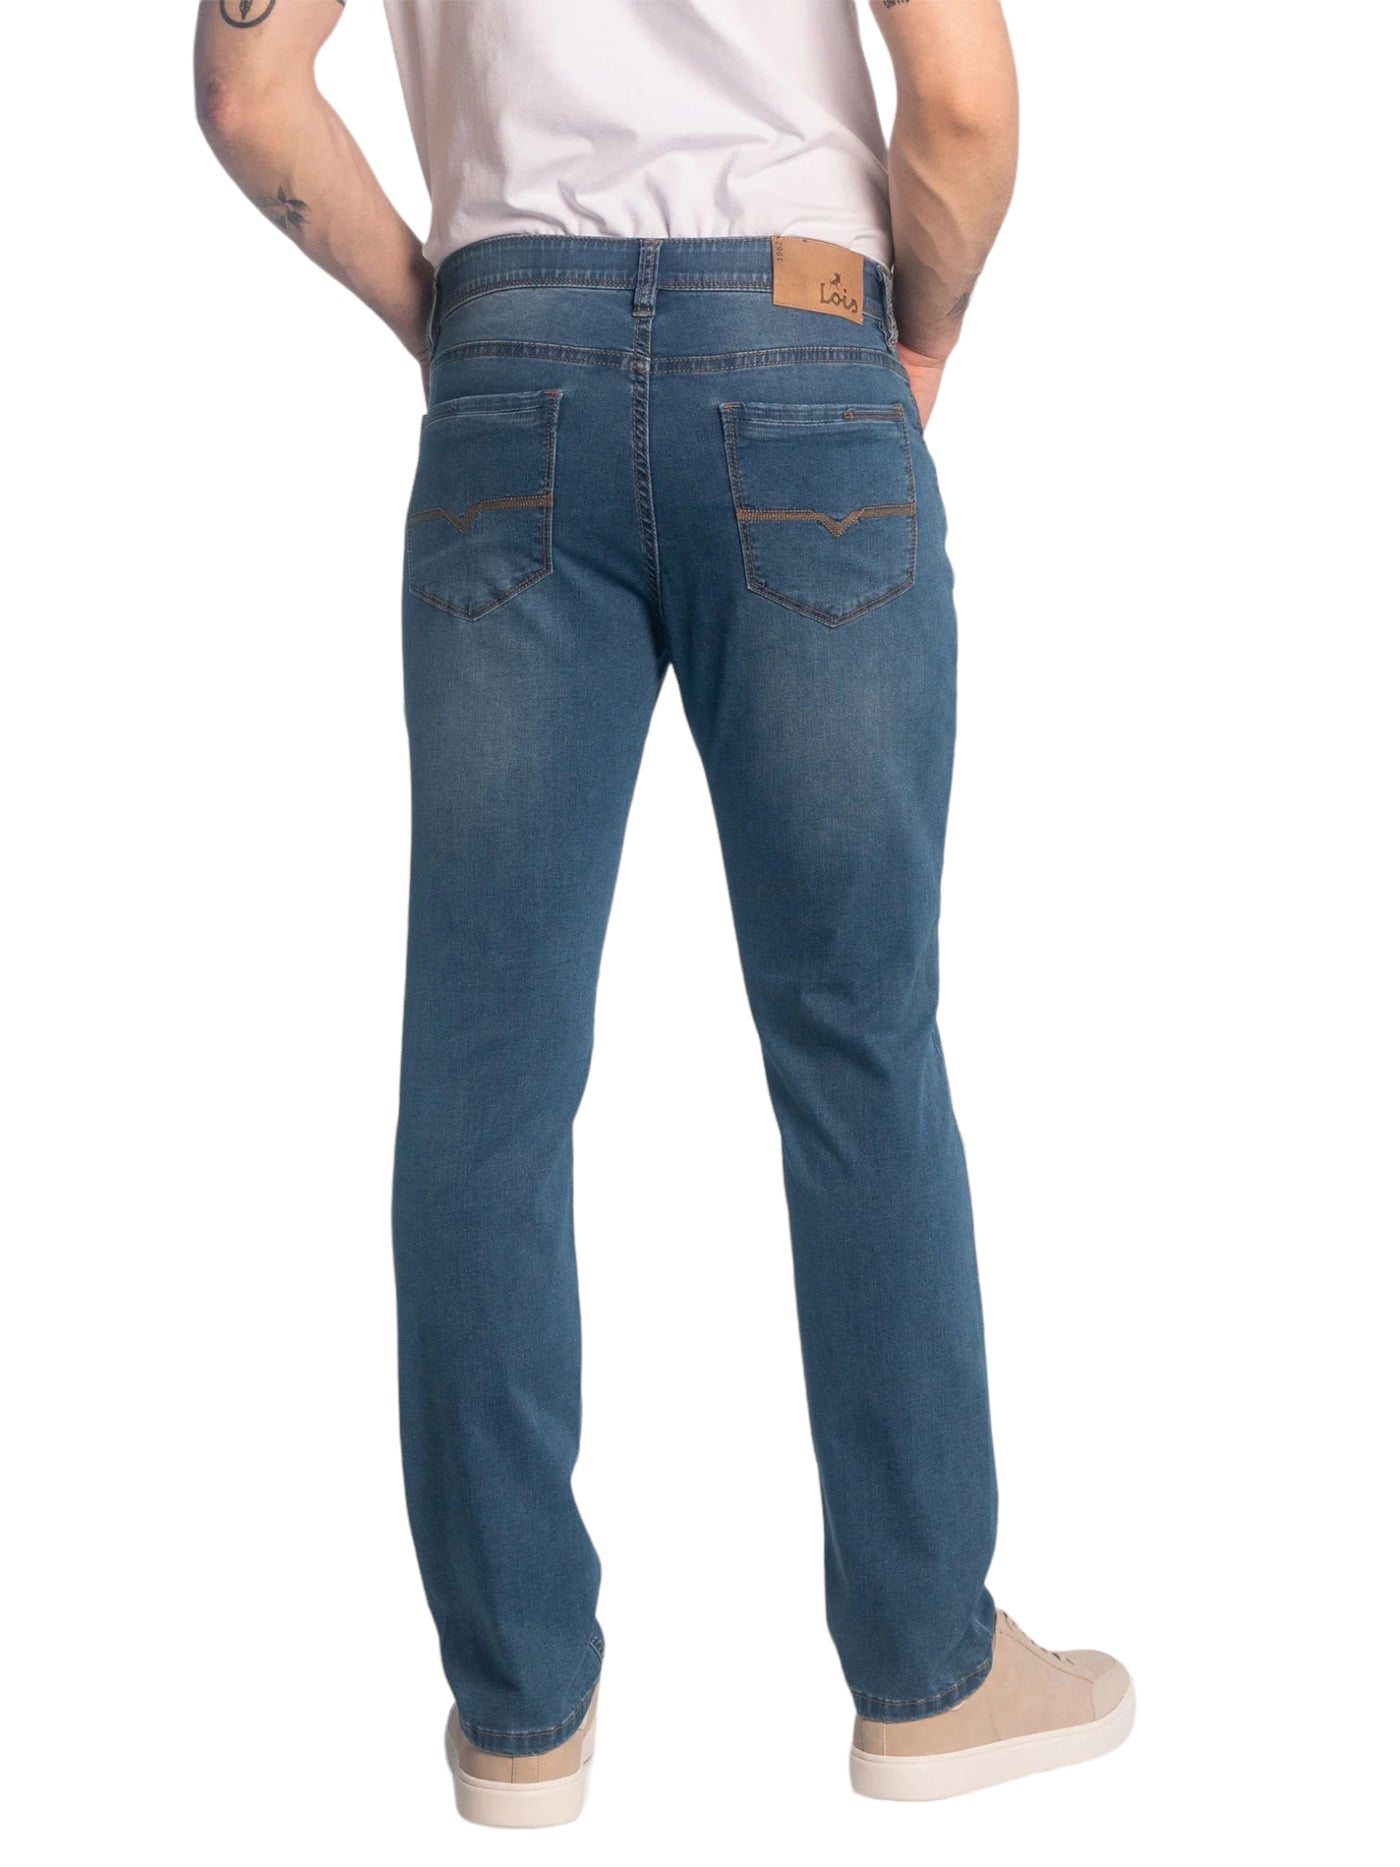 Jeans bleu moyen coupe semi-ajustée